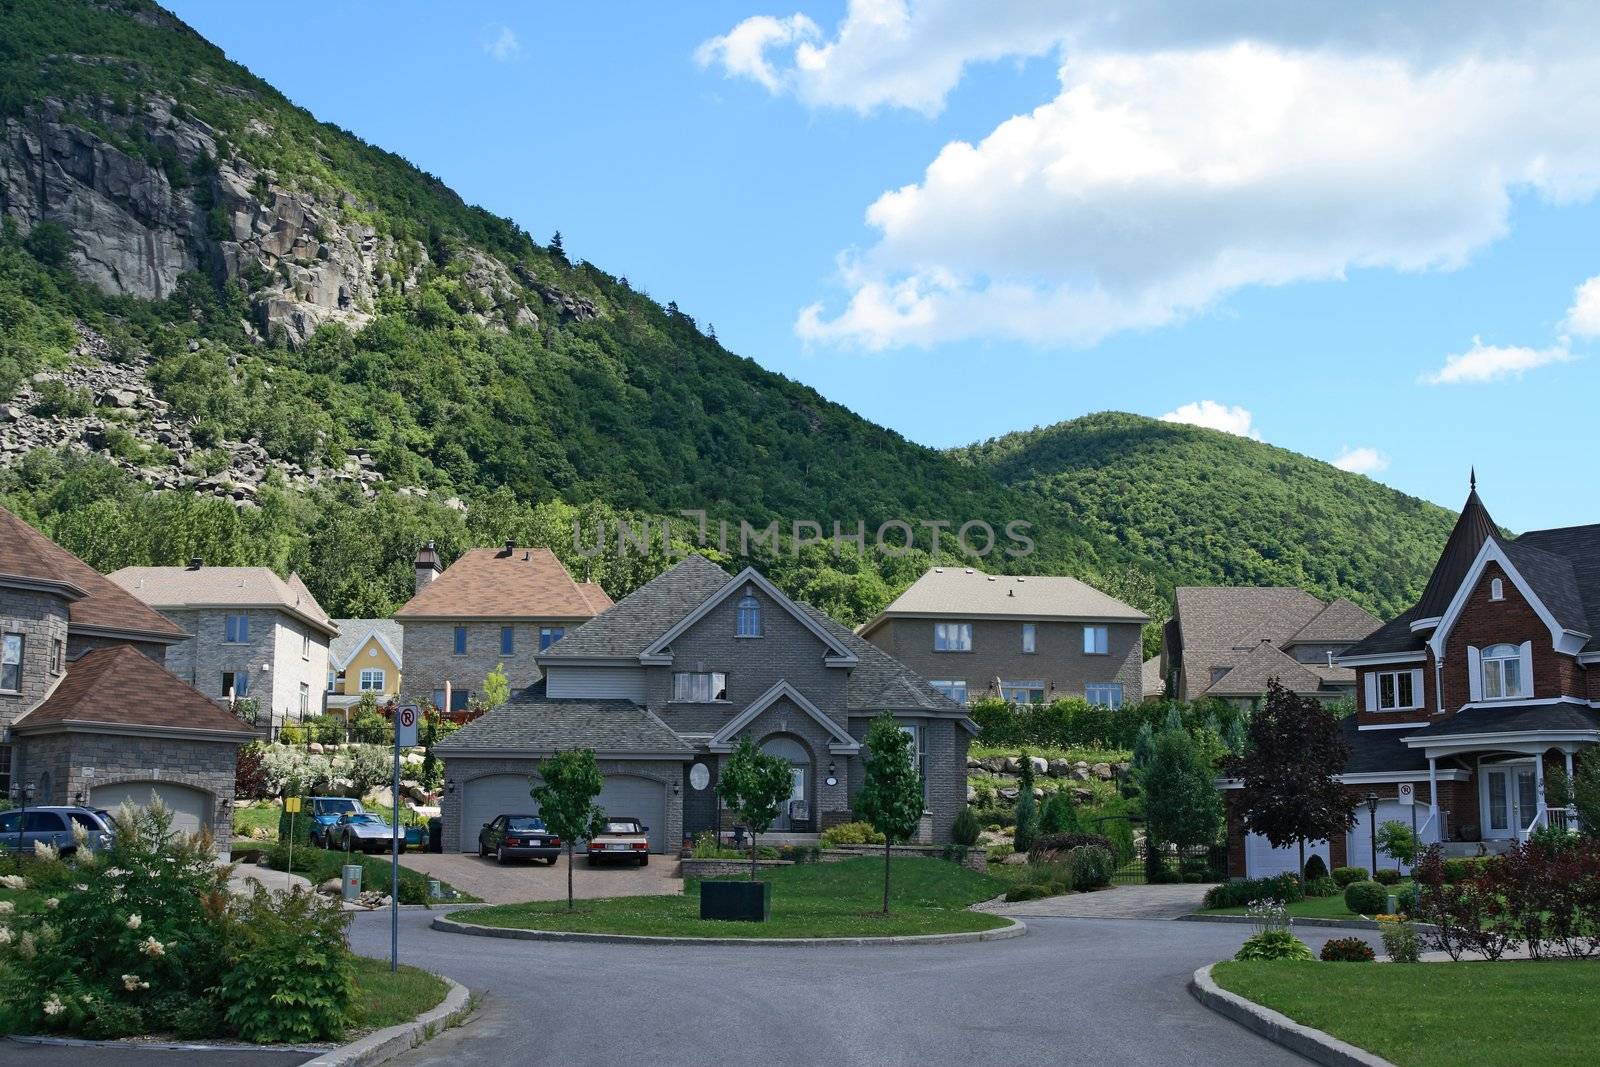 Expensive houses in a prestigious suburban neighborhood near the beautiful mountains.